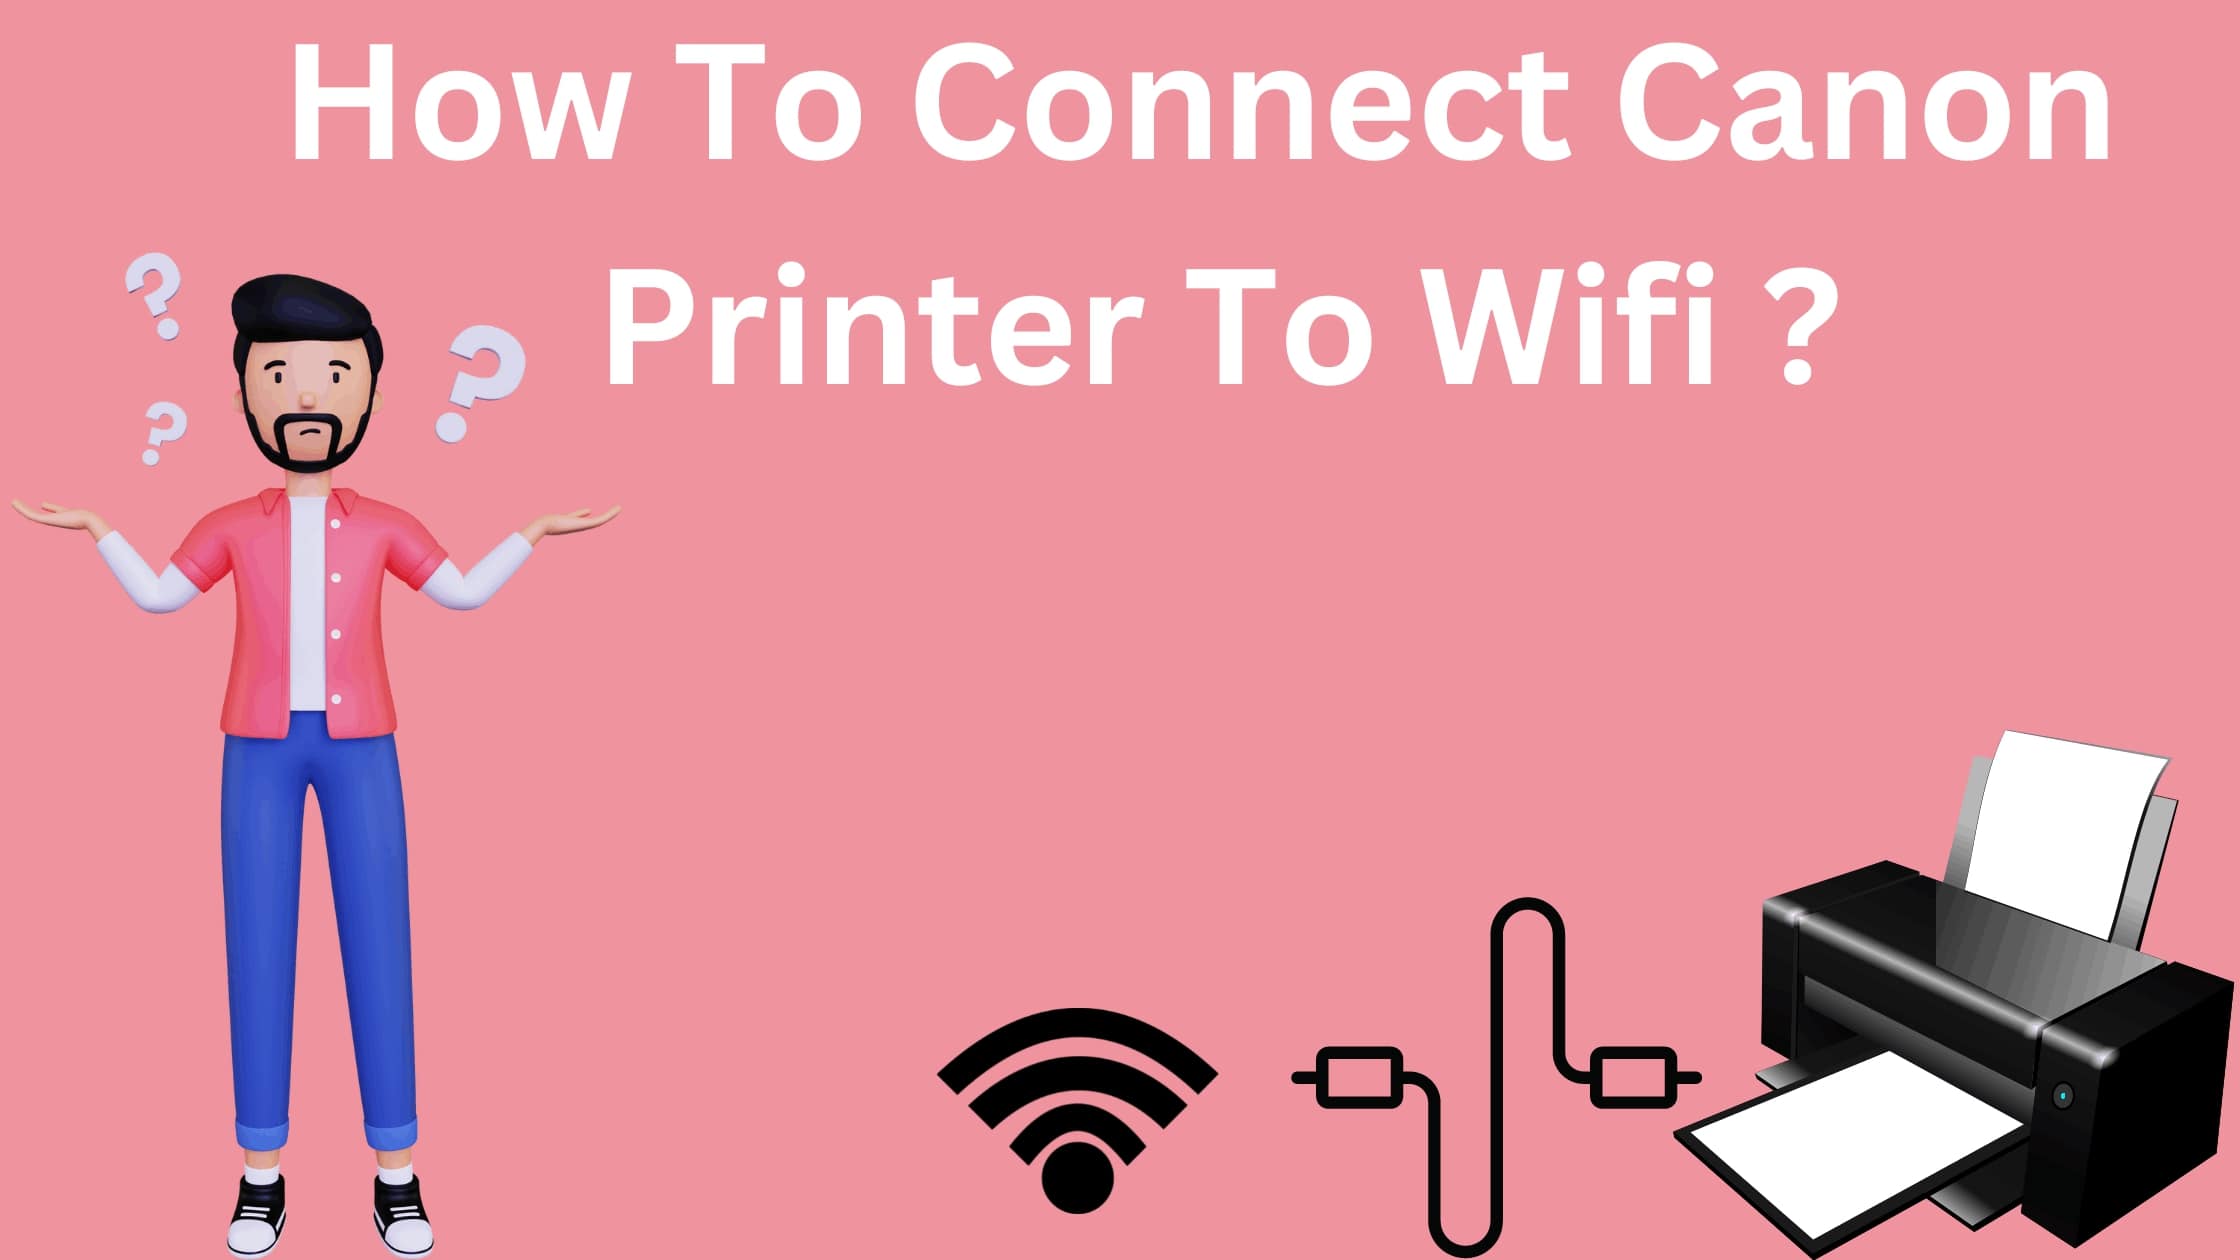 Connect Canon printer to WiFi